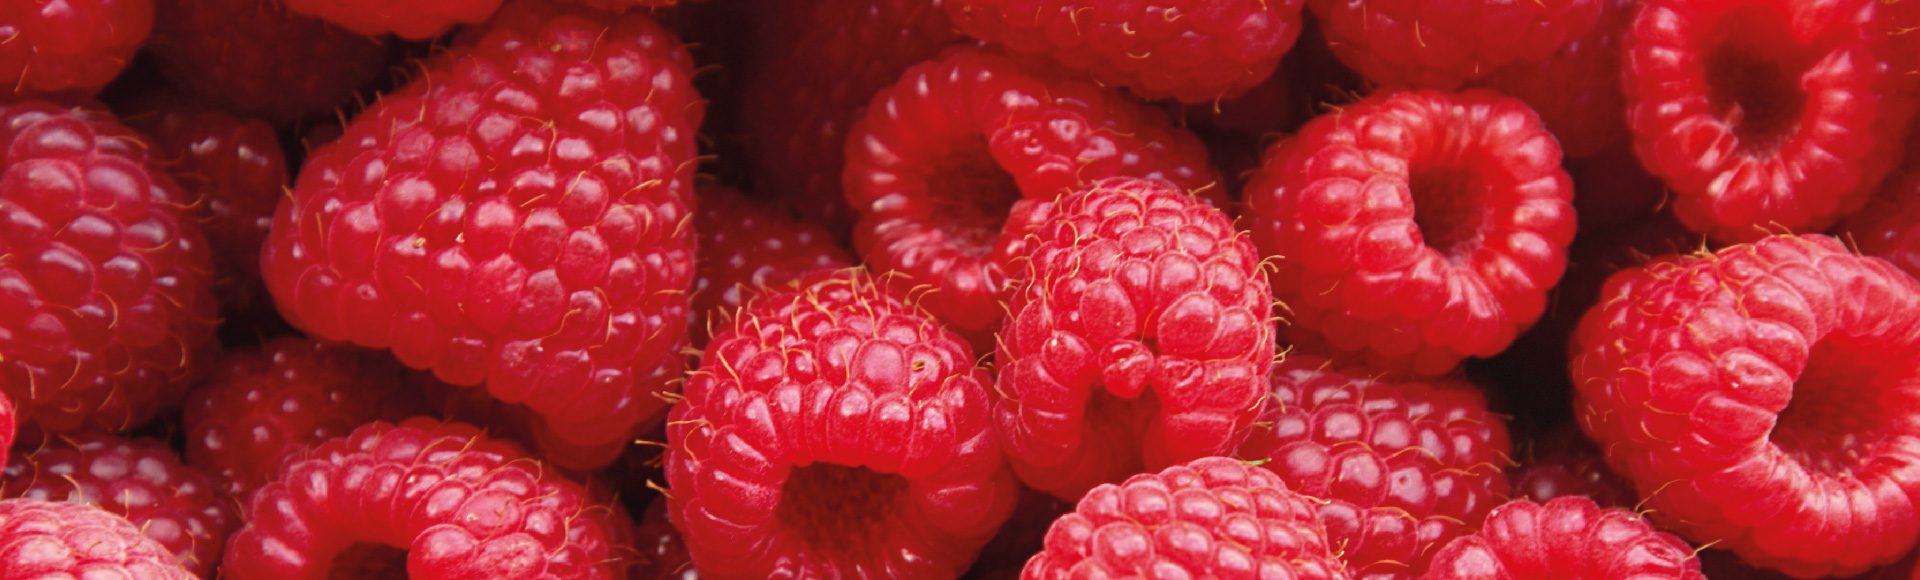 raspberry fertiliser and crop nutrition